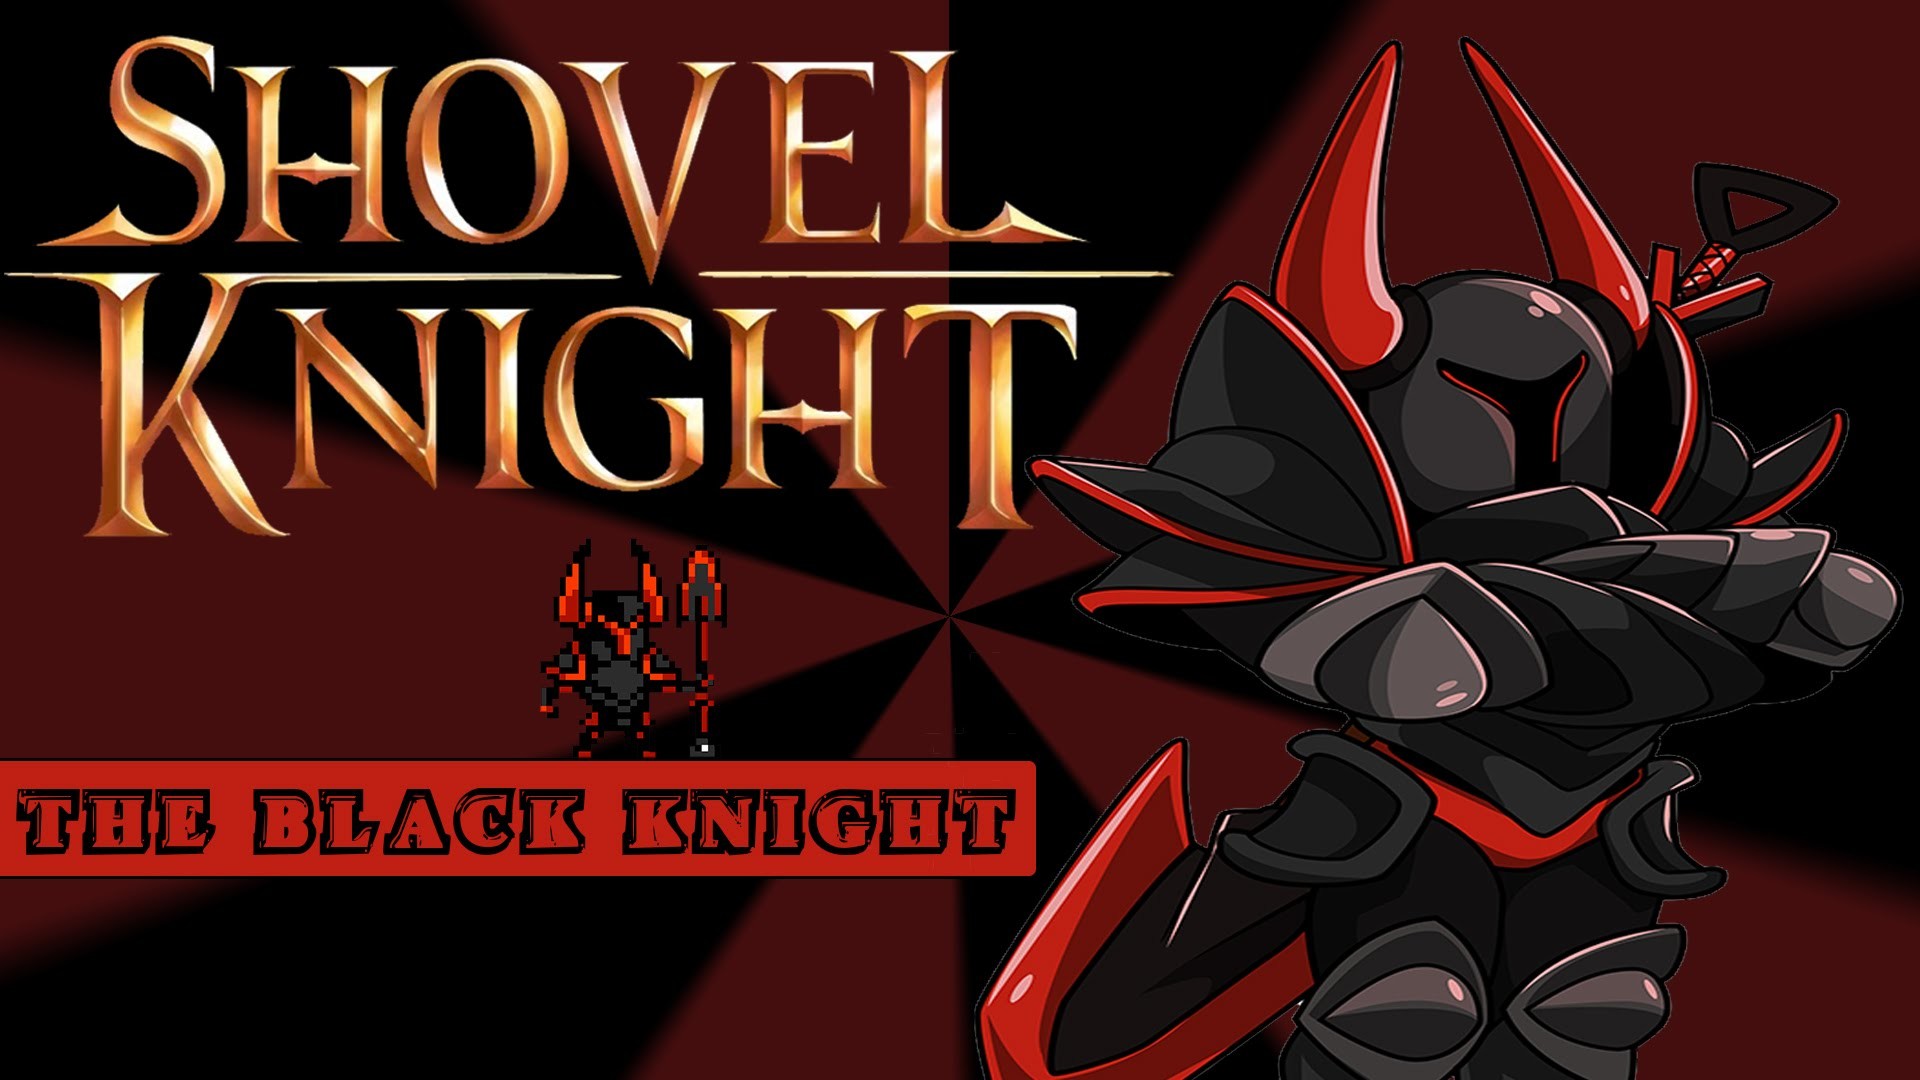 1920x1080 Shovel Knight pt 1 The Black Knight walkthrough + guide new game plus